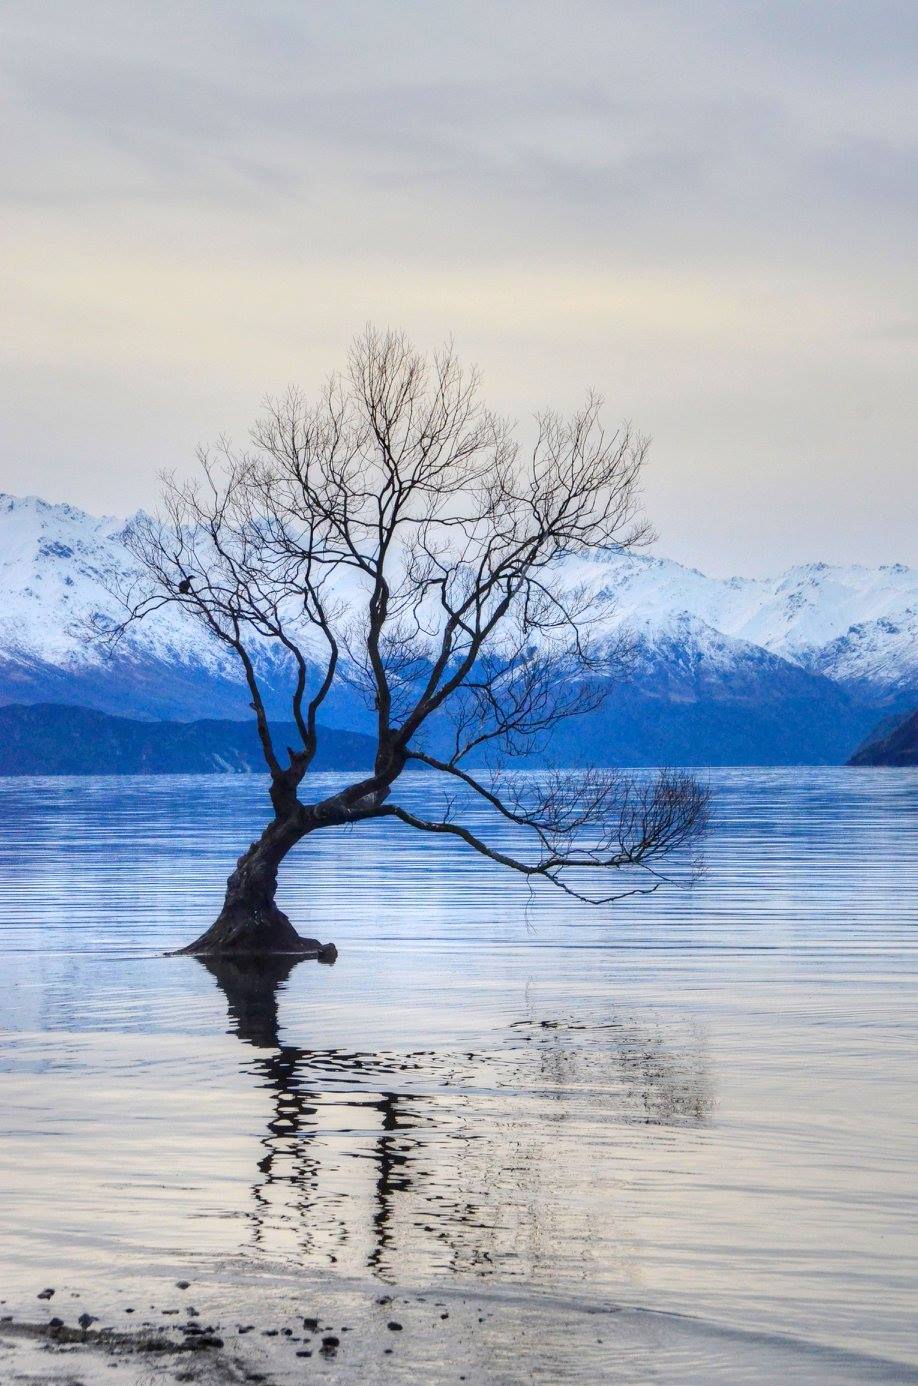 The well-known “Wanaka Tree” on Lake Wanaka on the southern west coast of New Zealand